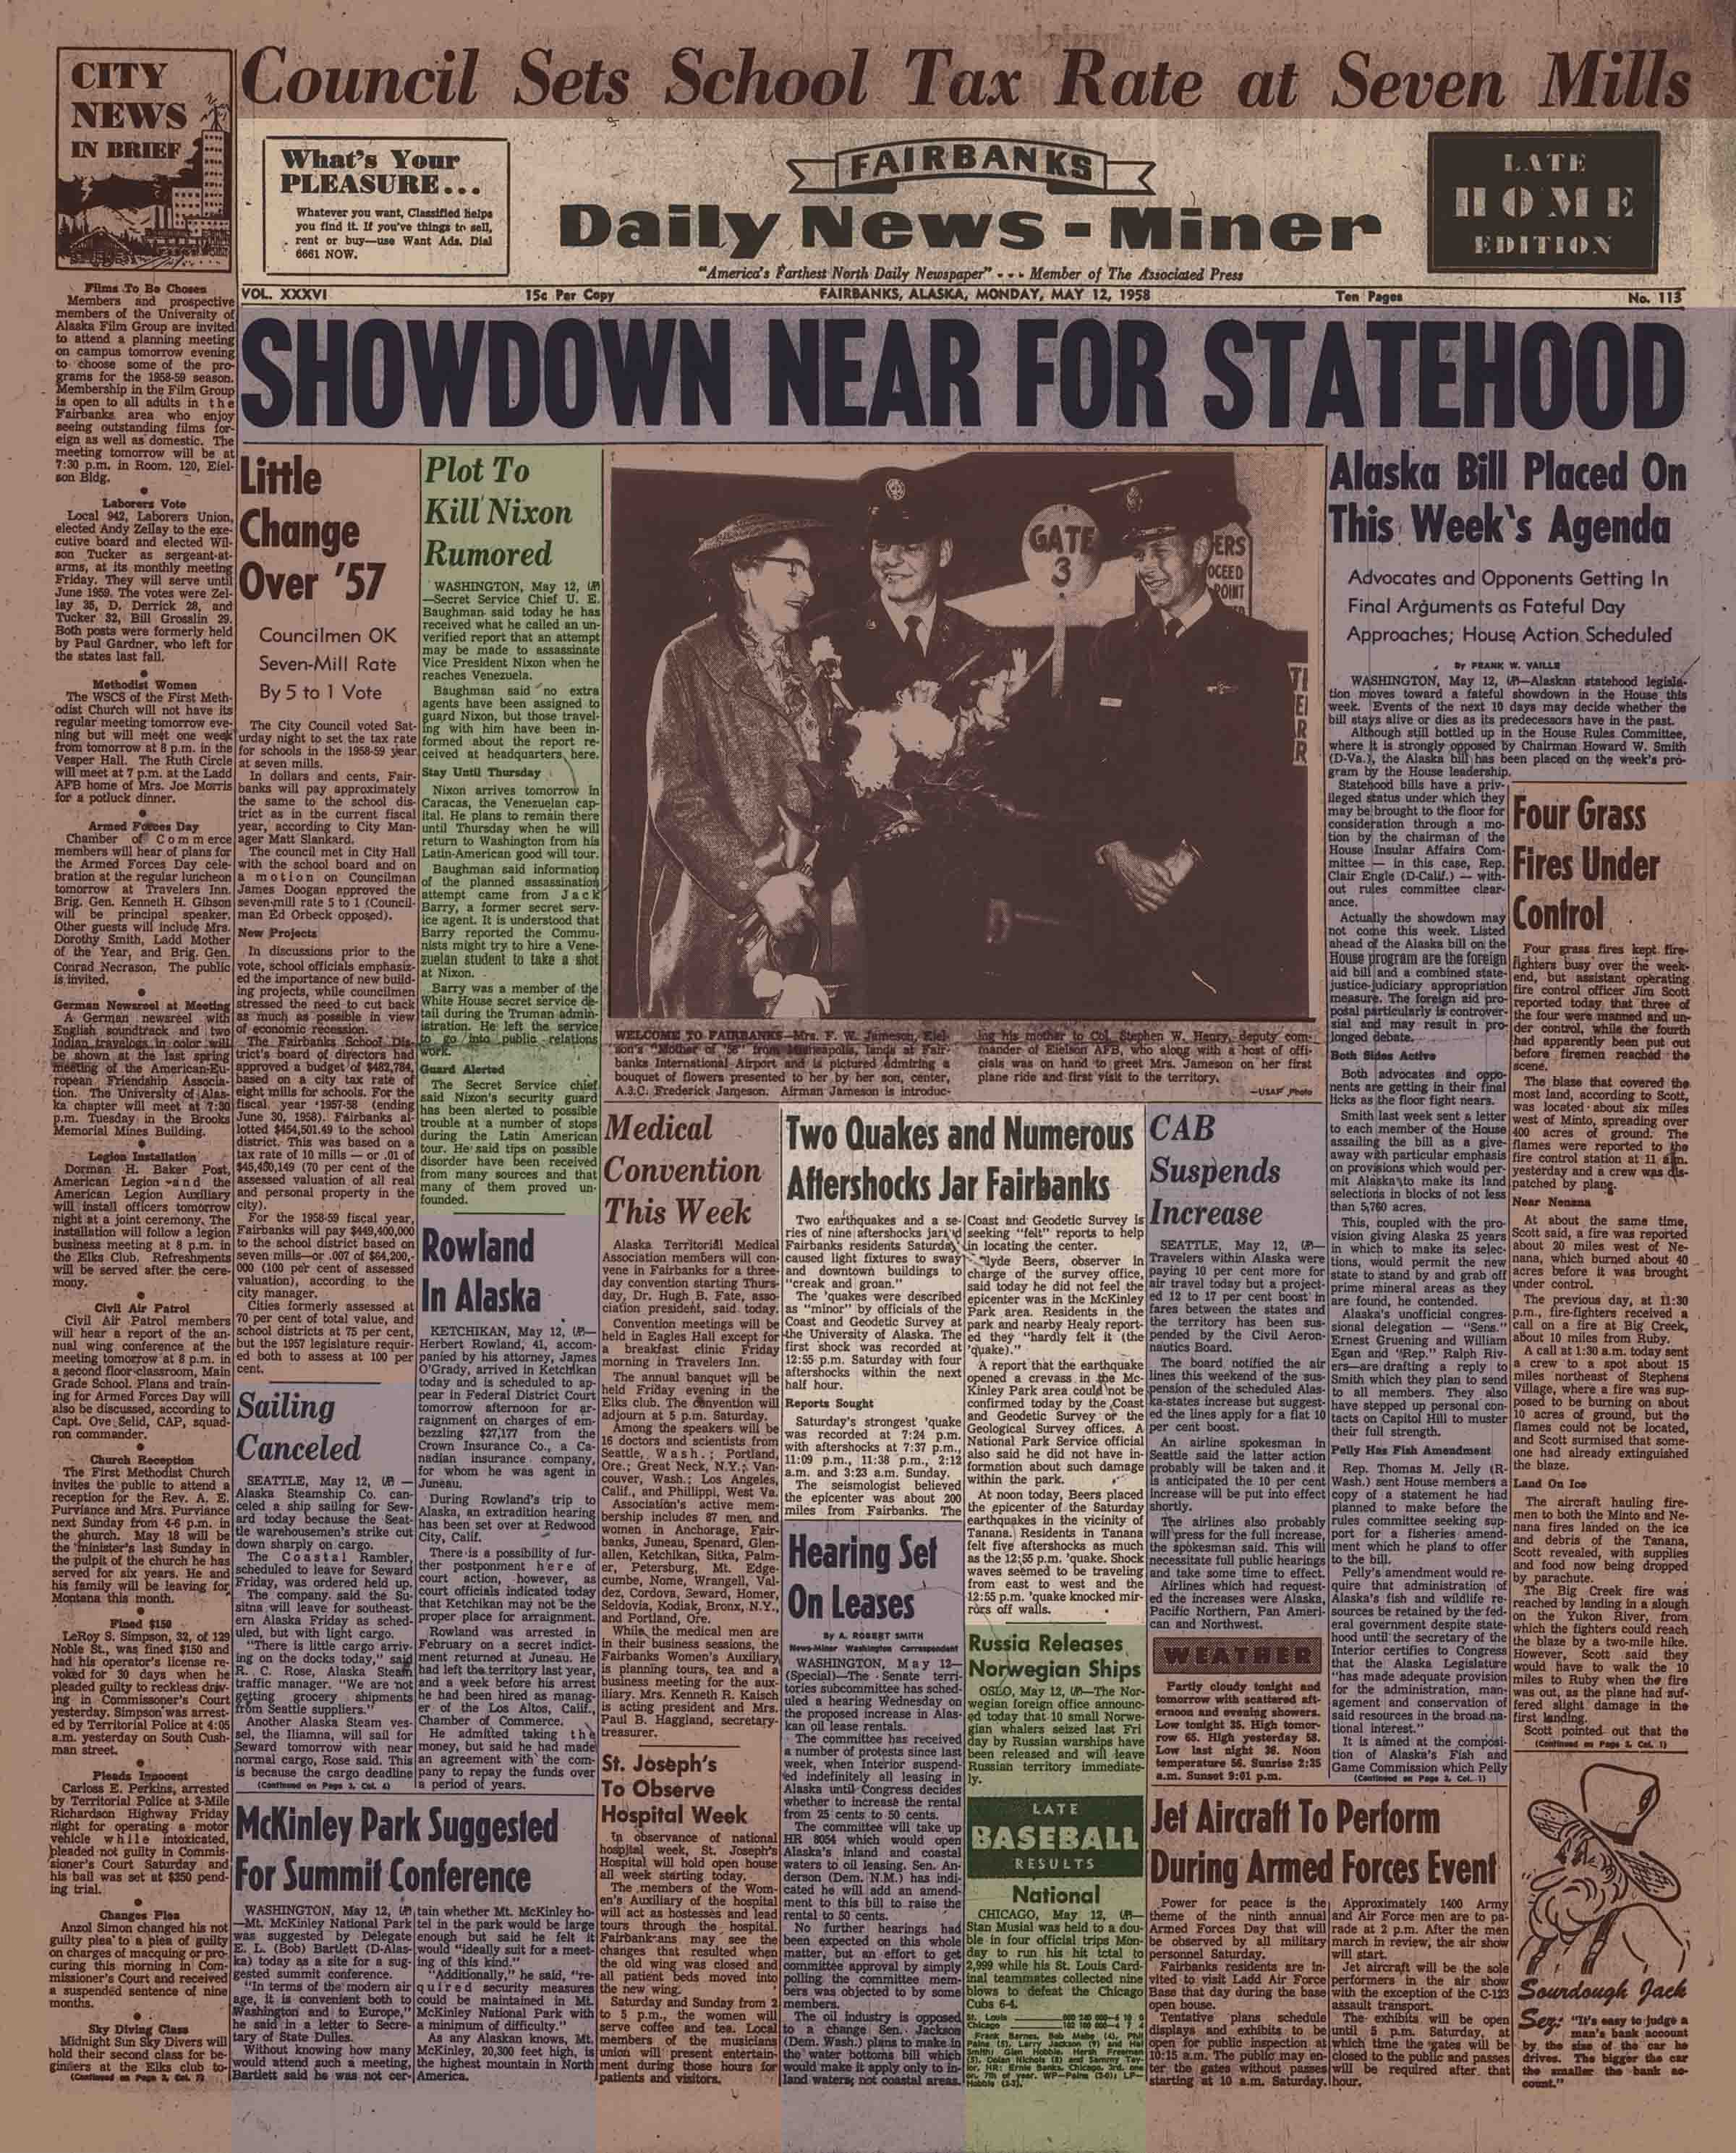 1958 May 12, Fairbanks Daily News-Miner (pg 1)